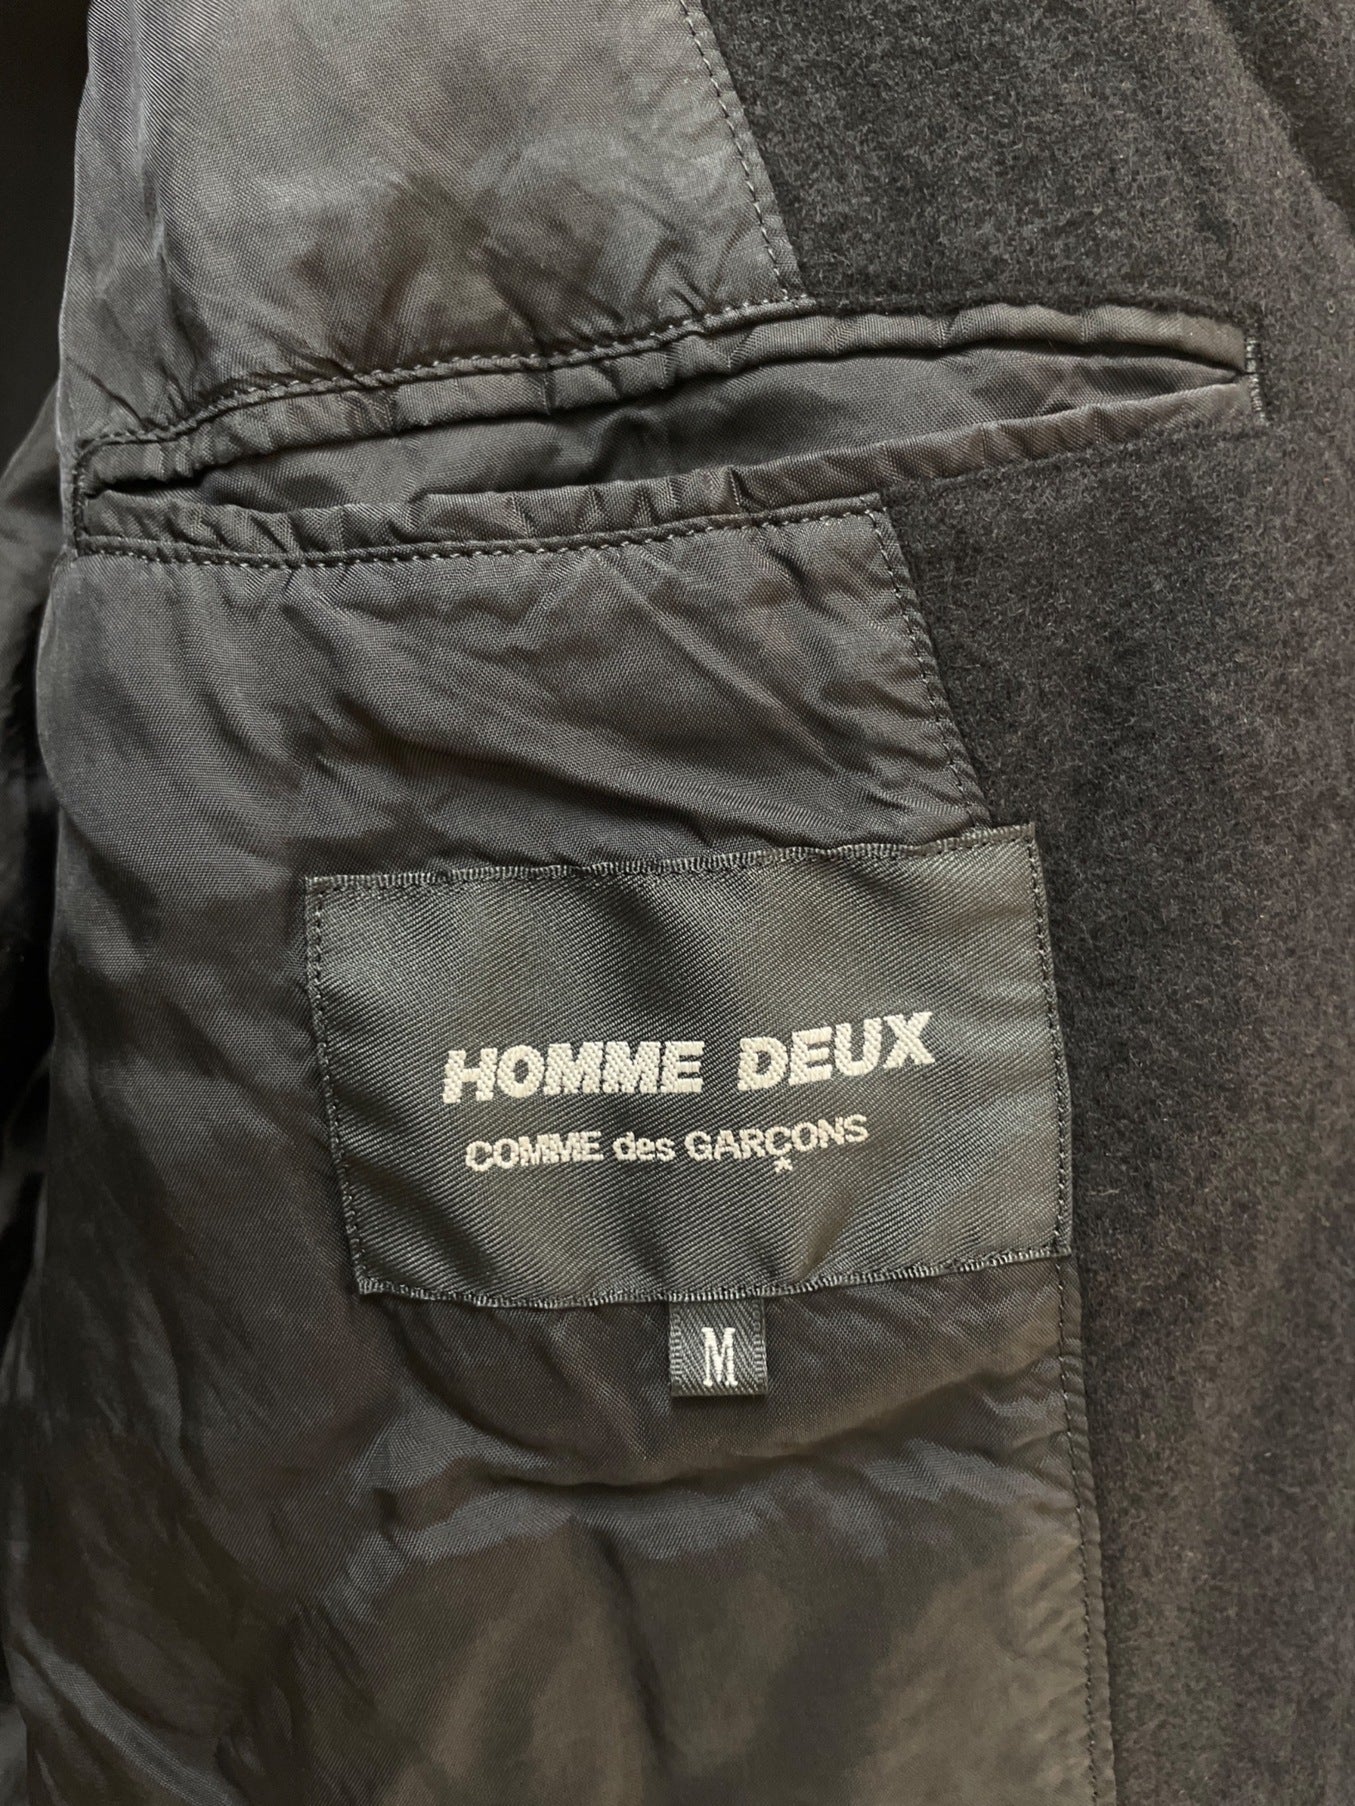 COMME des GARCONS HOMME DEUX Wool Product Finished Jacket DD-J050